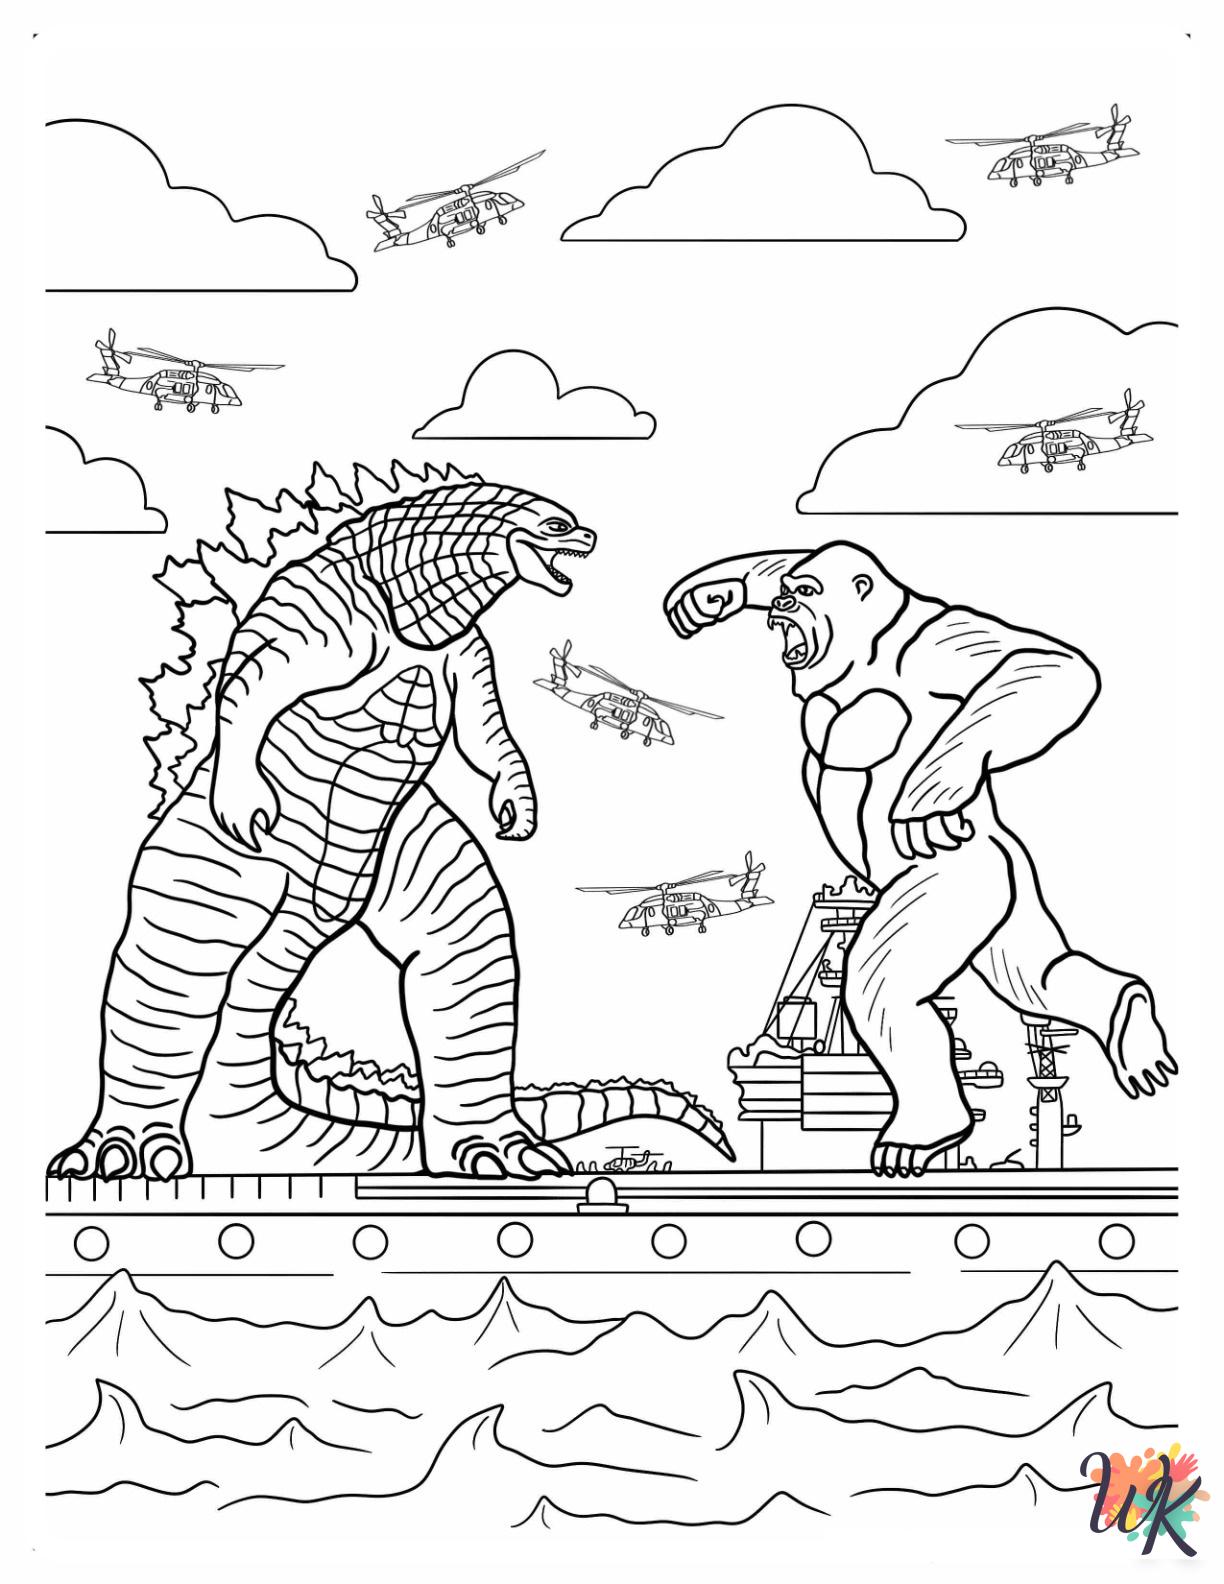 Godzilla coloring pages free printable